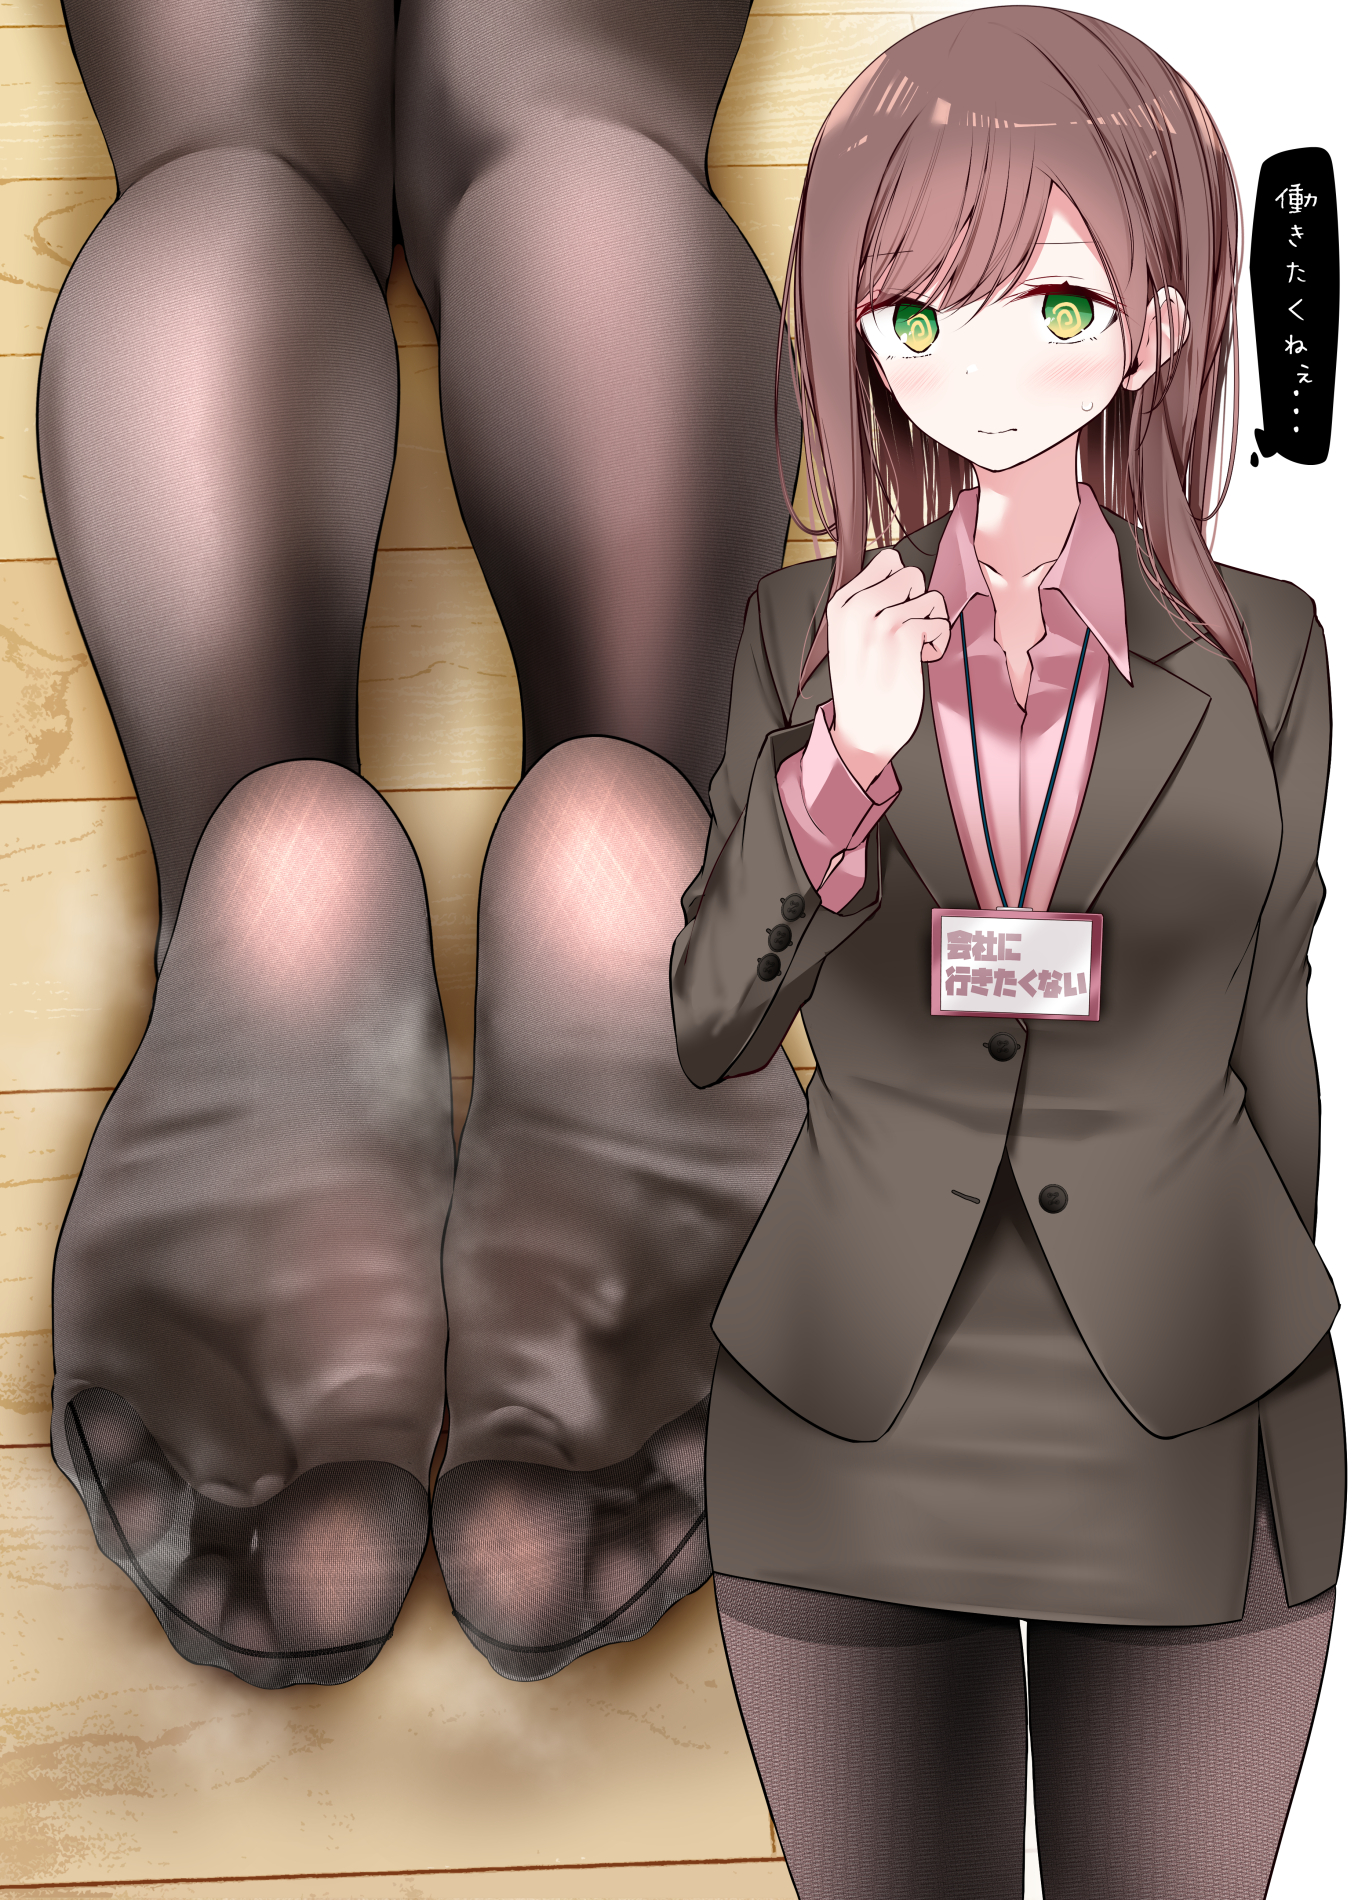 Office Girl Anime Girls Foot Sole Foot Sweat Portrait Display Feet Japanese Standing Long Hair Blush 1358x1900